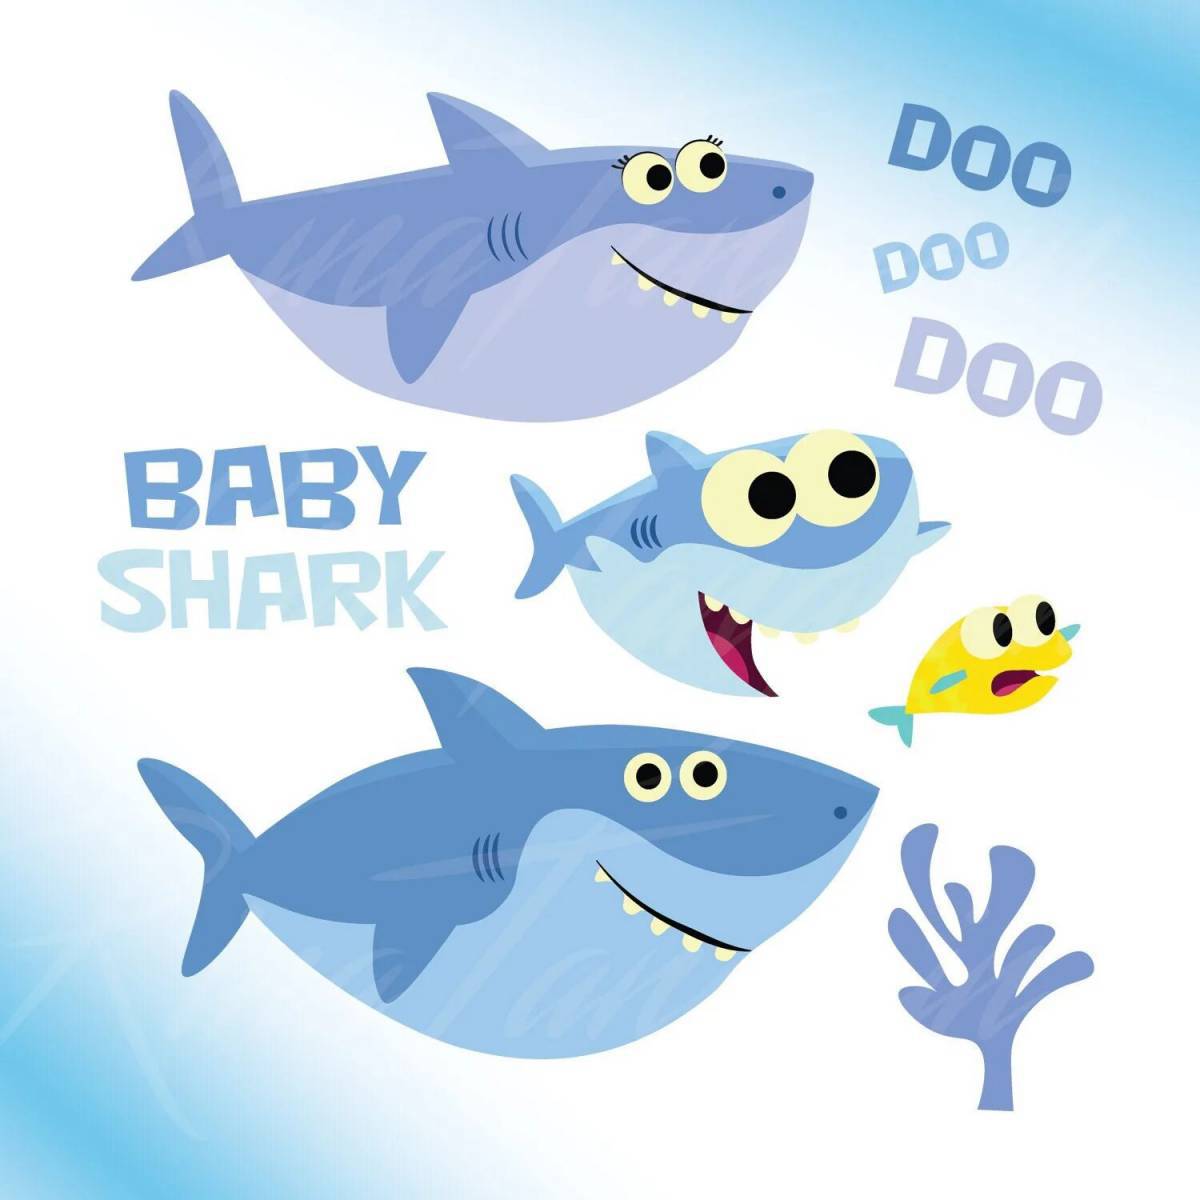 Baby shark #21